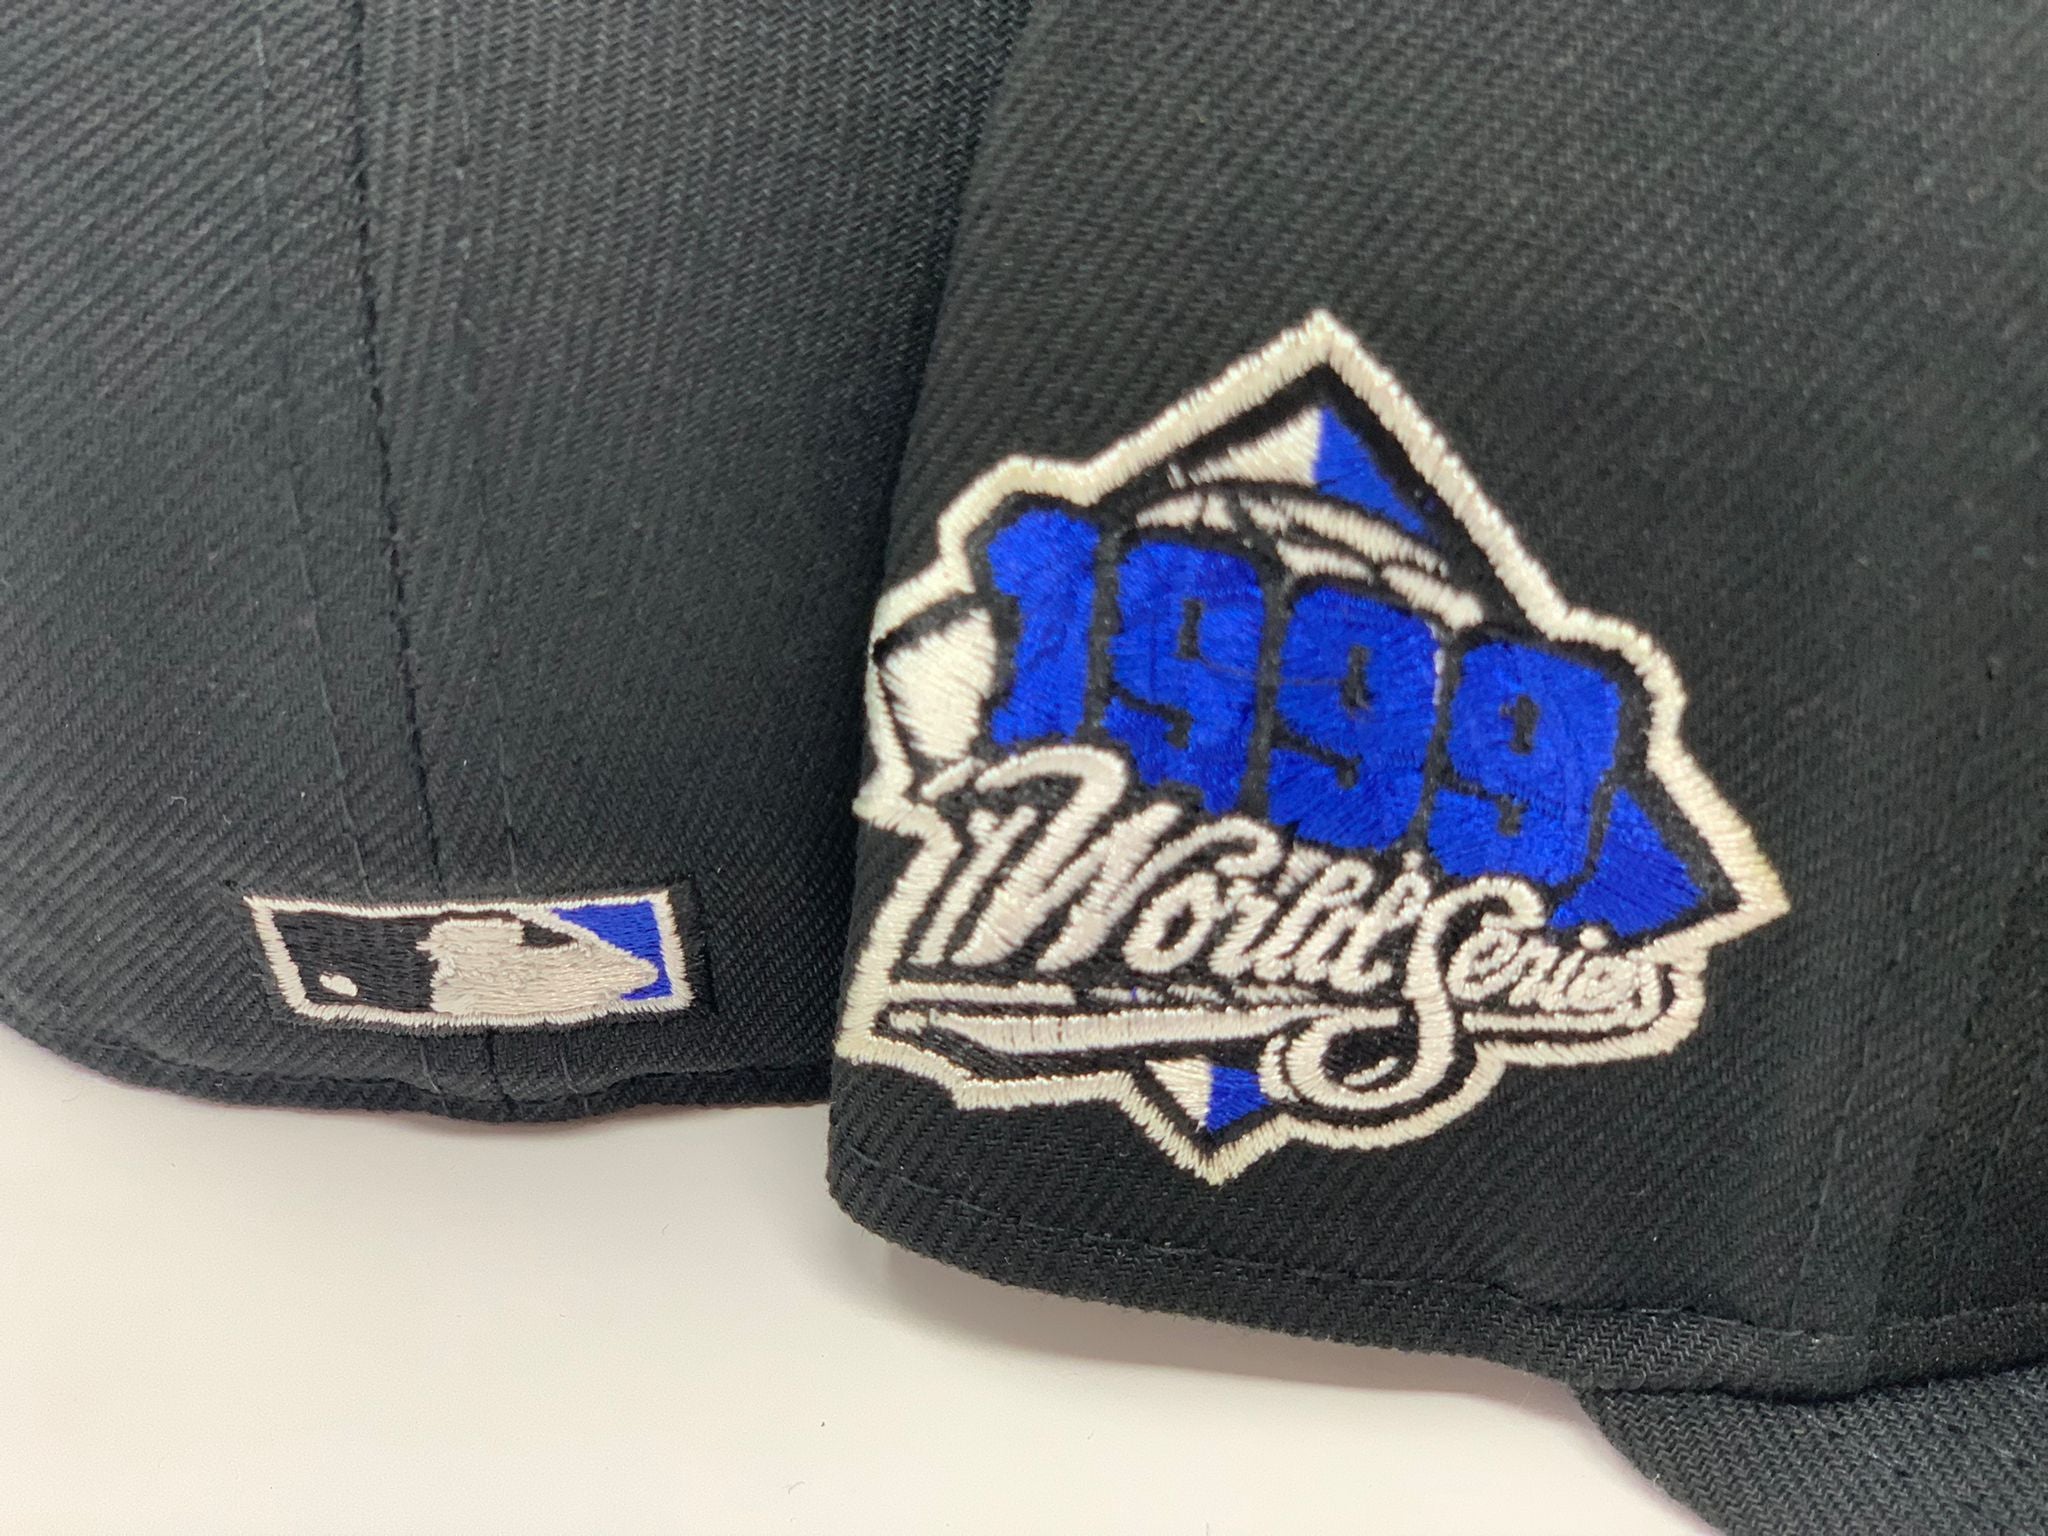 Red New York Yankees 1999 World Series Custom New Era Fitted Hat – Sports  World 165